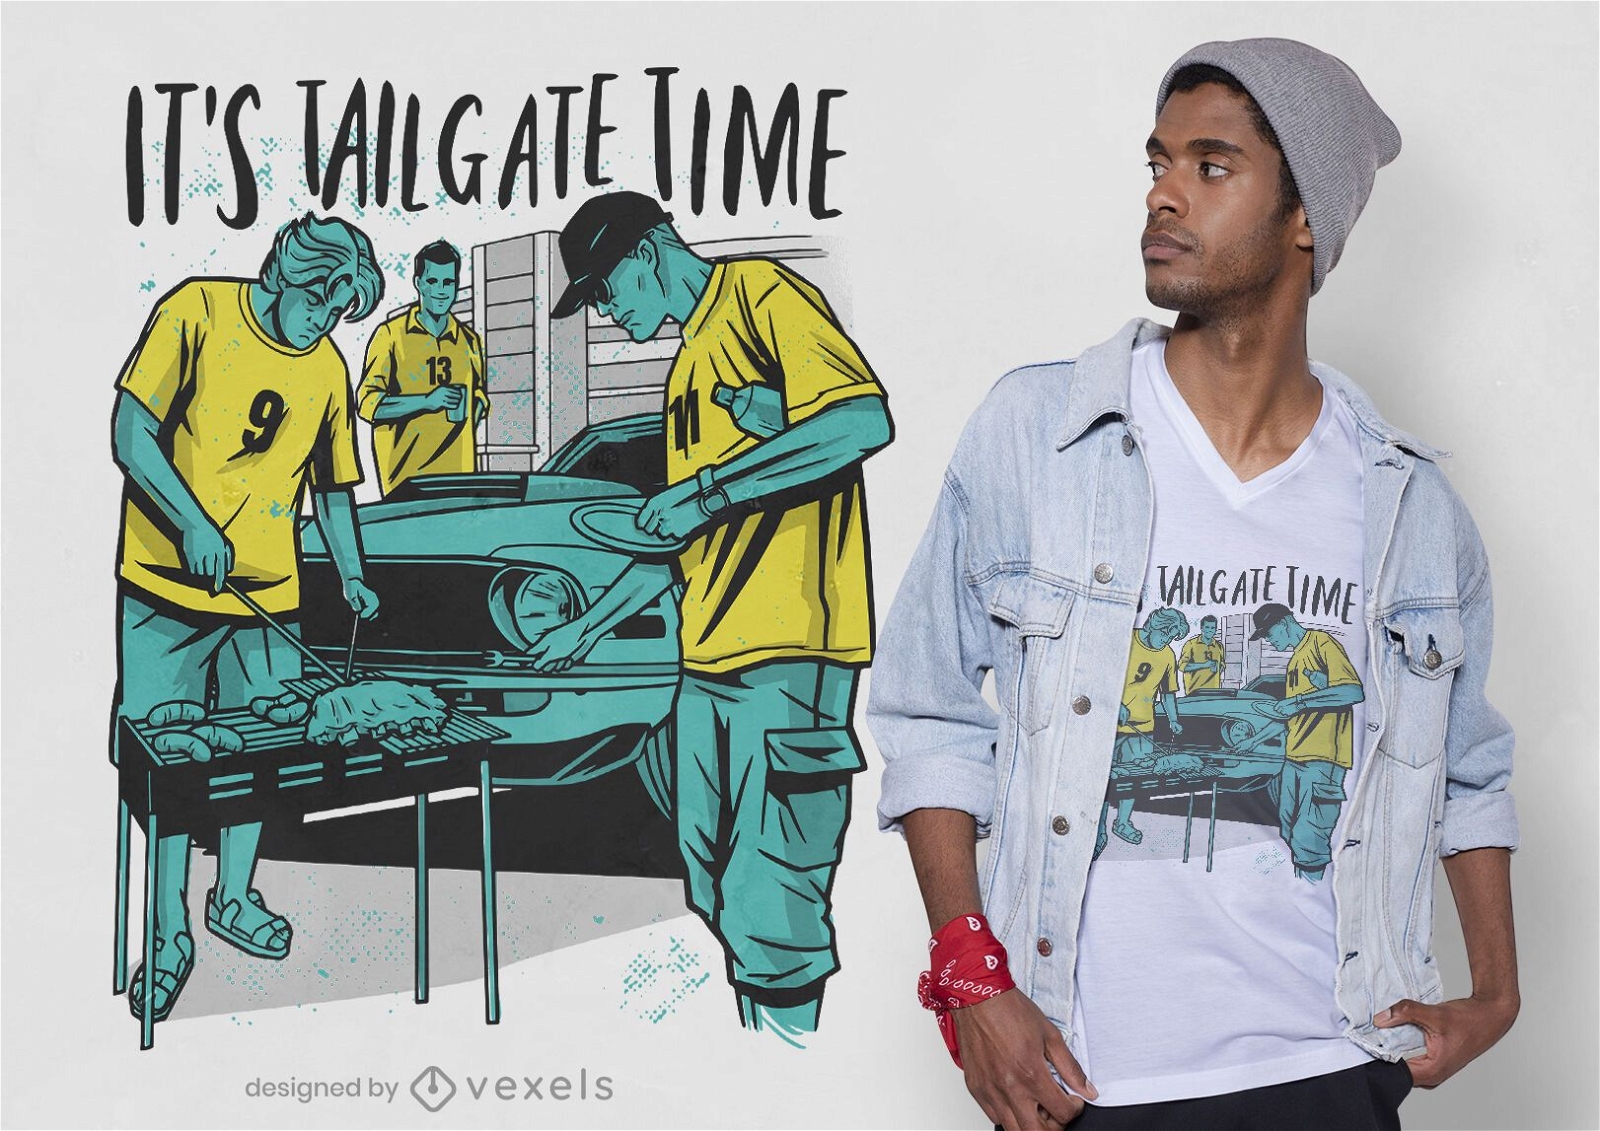 Tailgate time t-shirt design